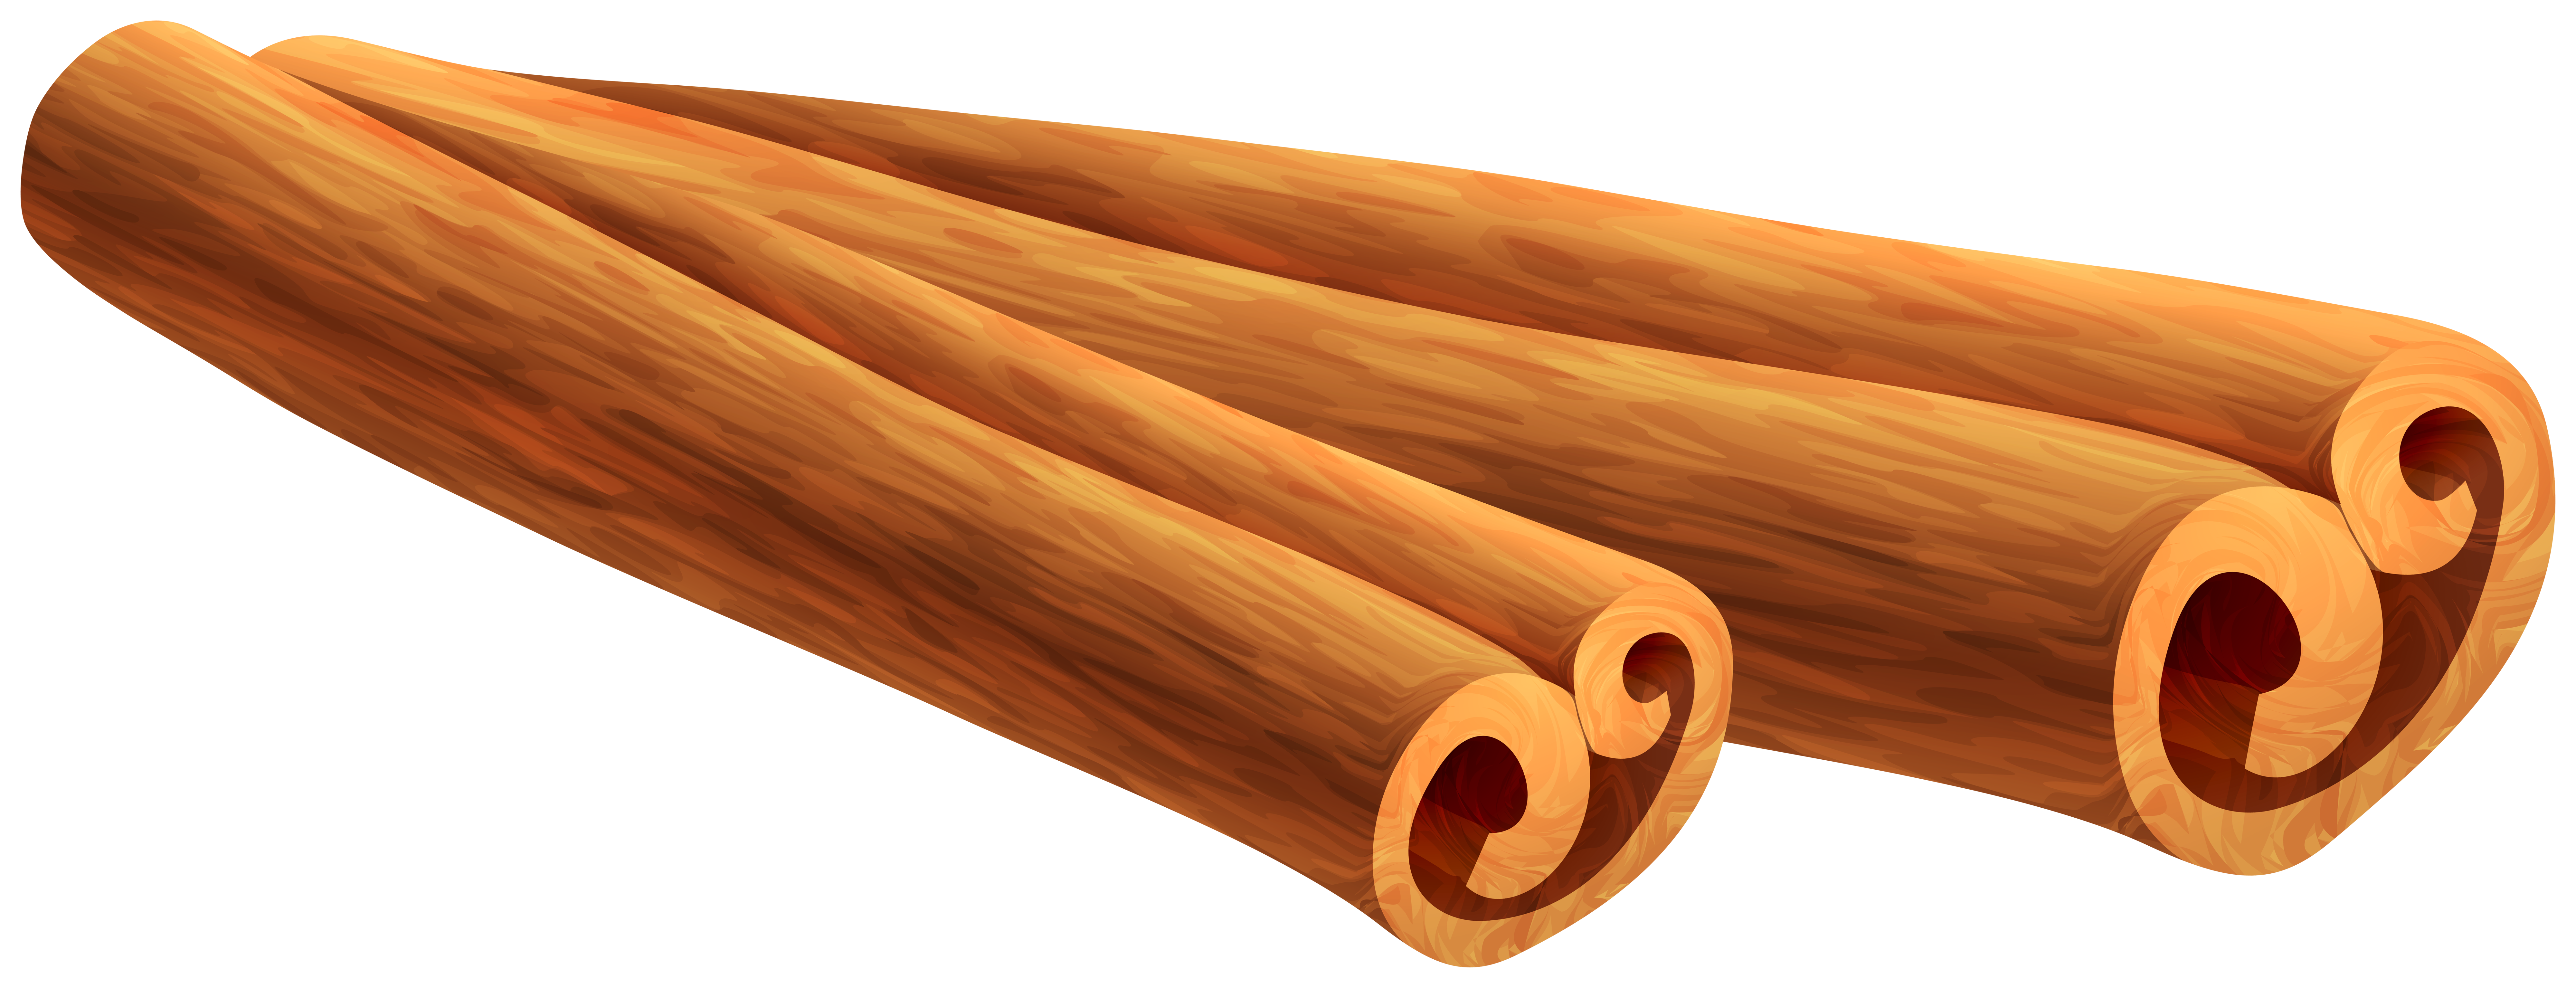 Cinnamon Sticks Transparent Image.